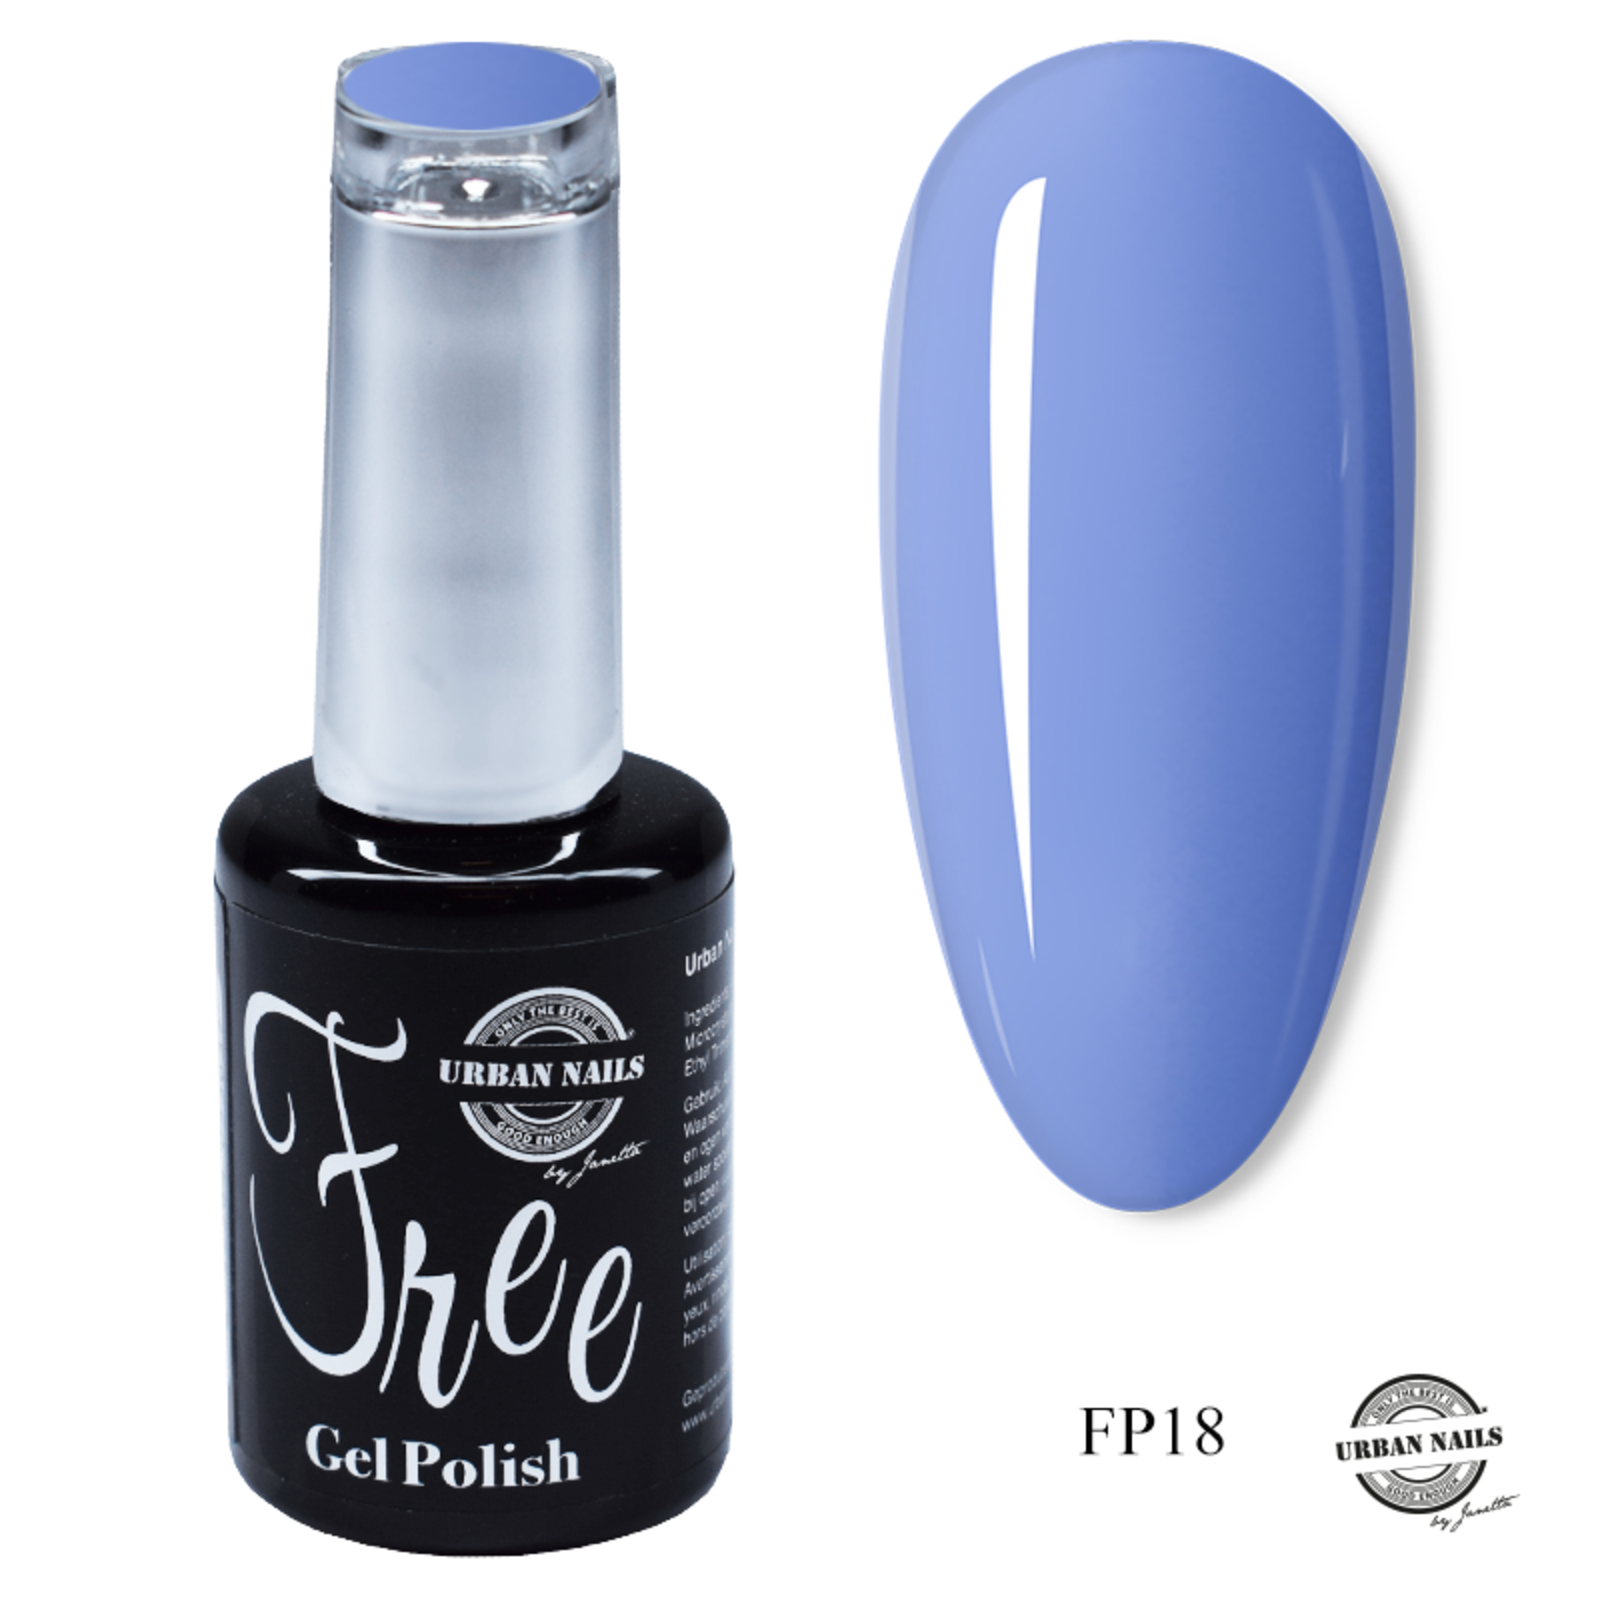 Urban nails Free Gelpolish FP18